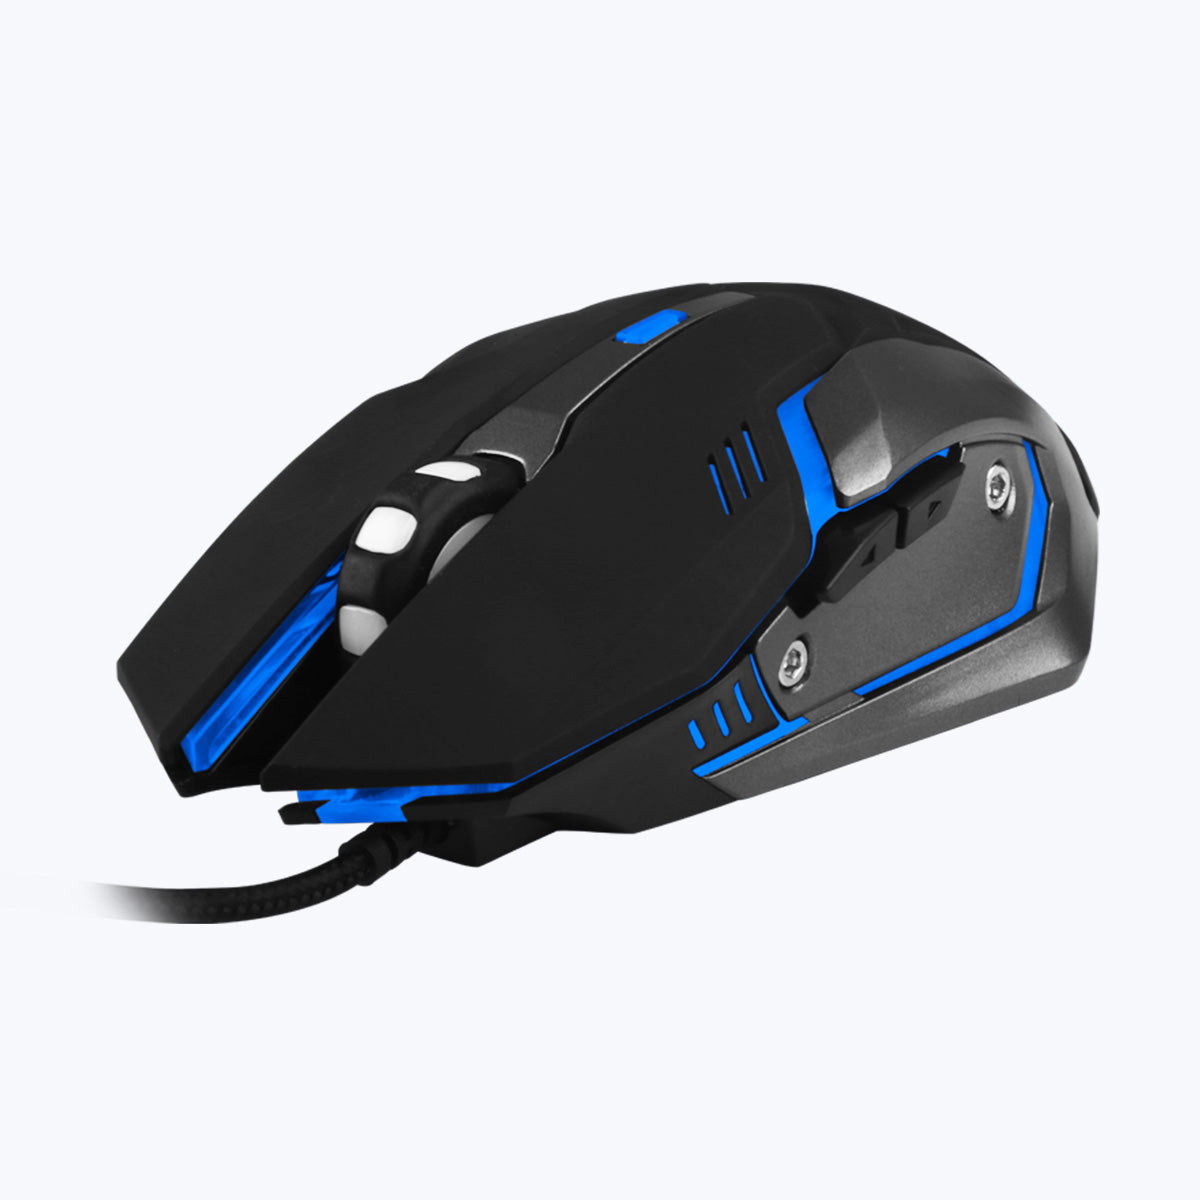 Zeb-Transformer-M - Premium Gaming Mouse - Zebronics